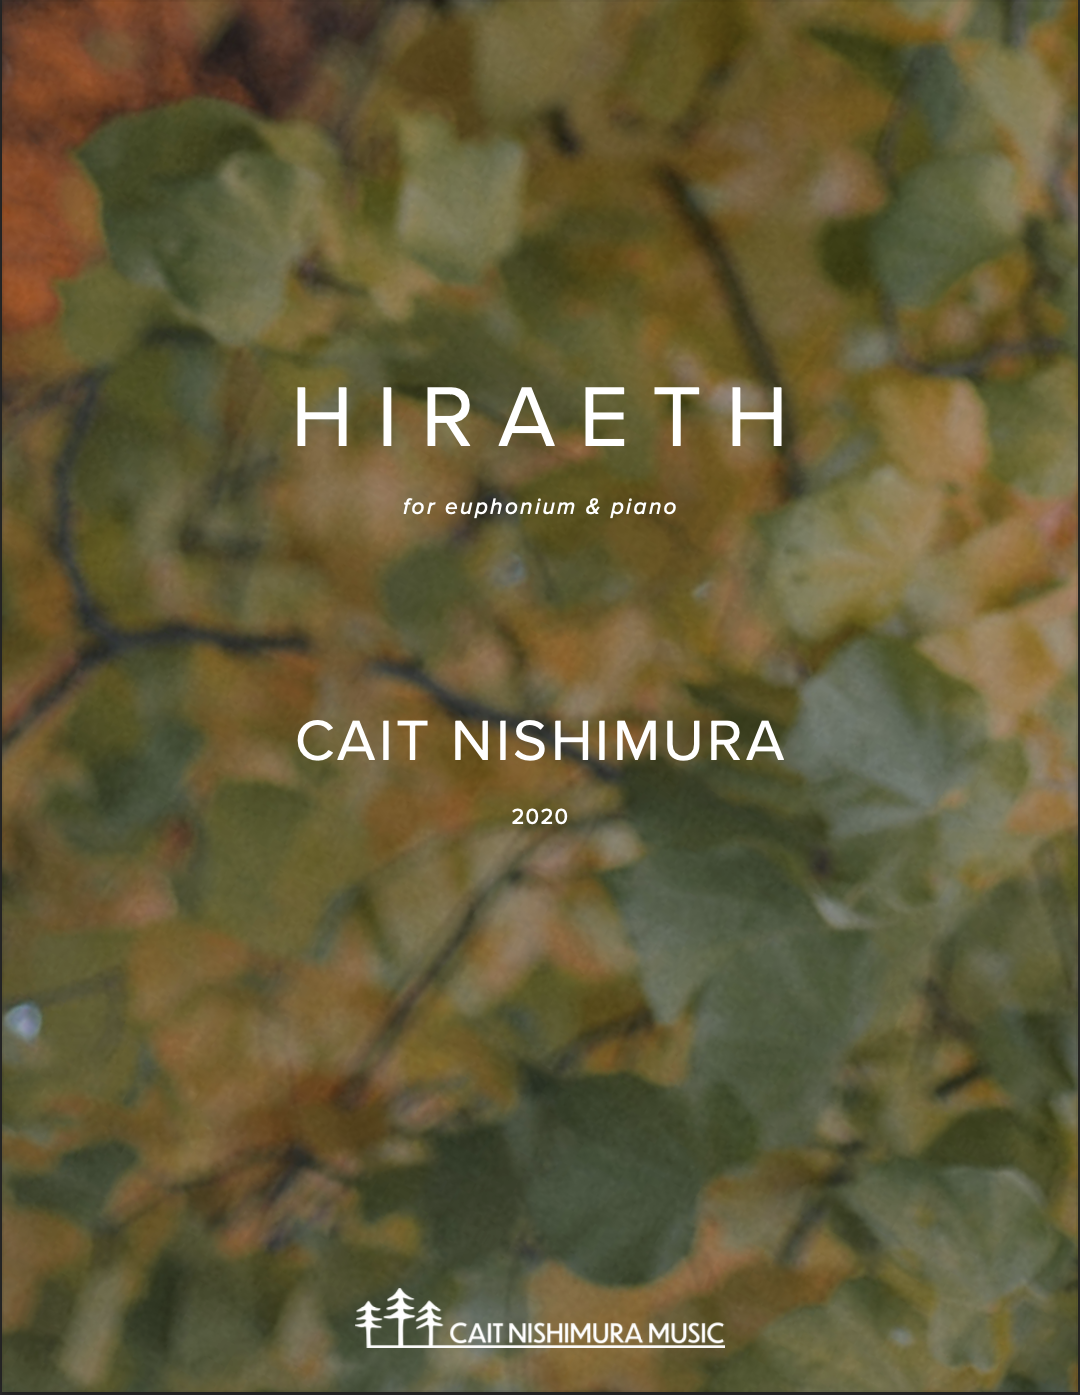 Hiraeth (Euphonium Version) by Cait Nishimura